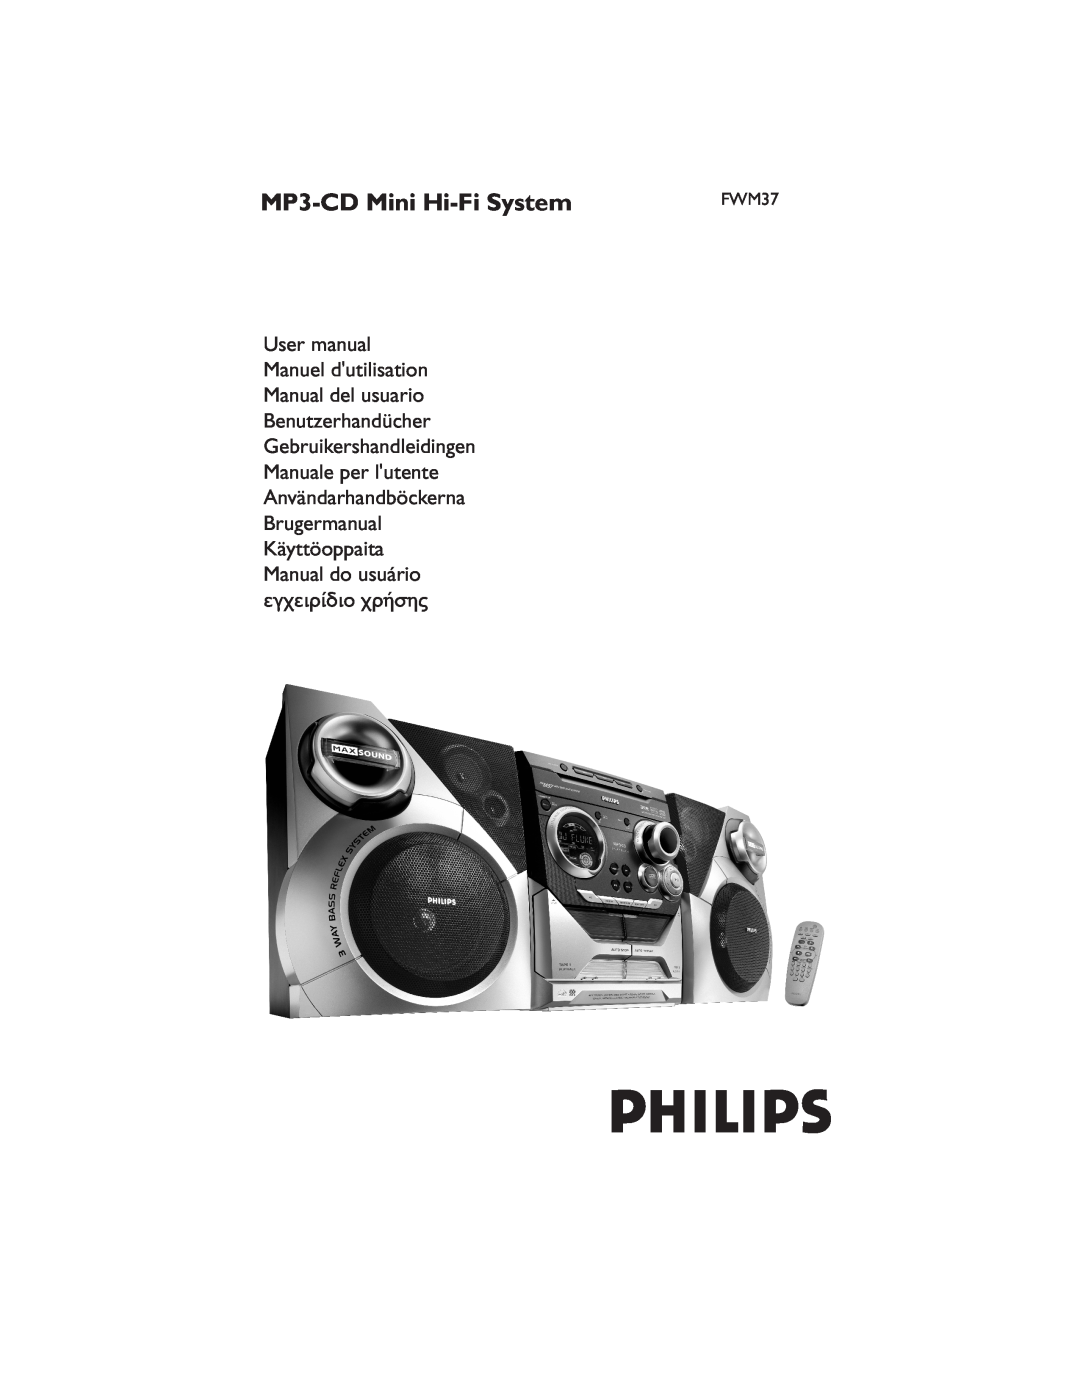 Philips user manual MP3-CDMini Hi-FiSystem, Manual do usuário, FWM37 